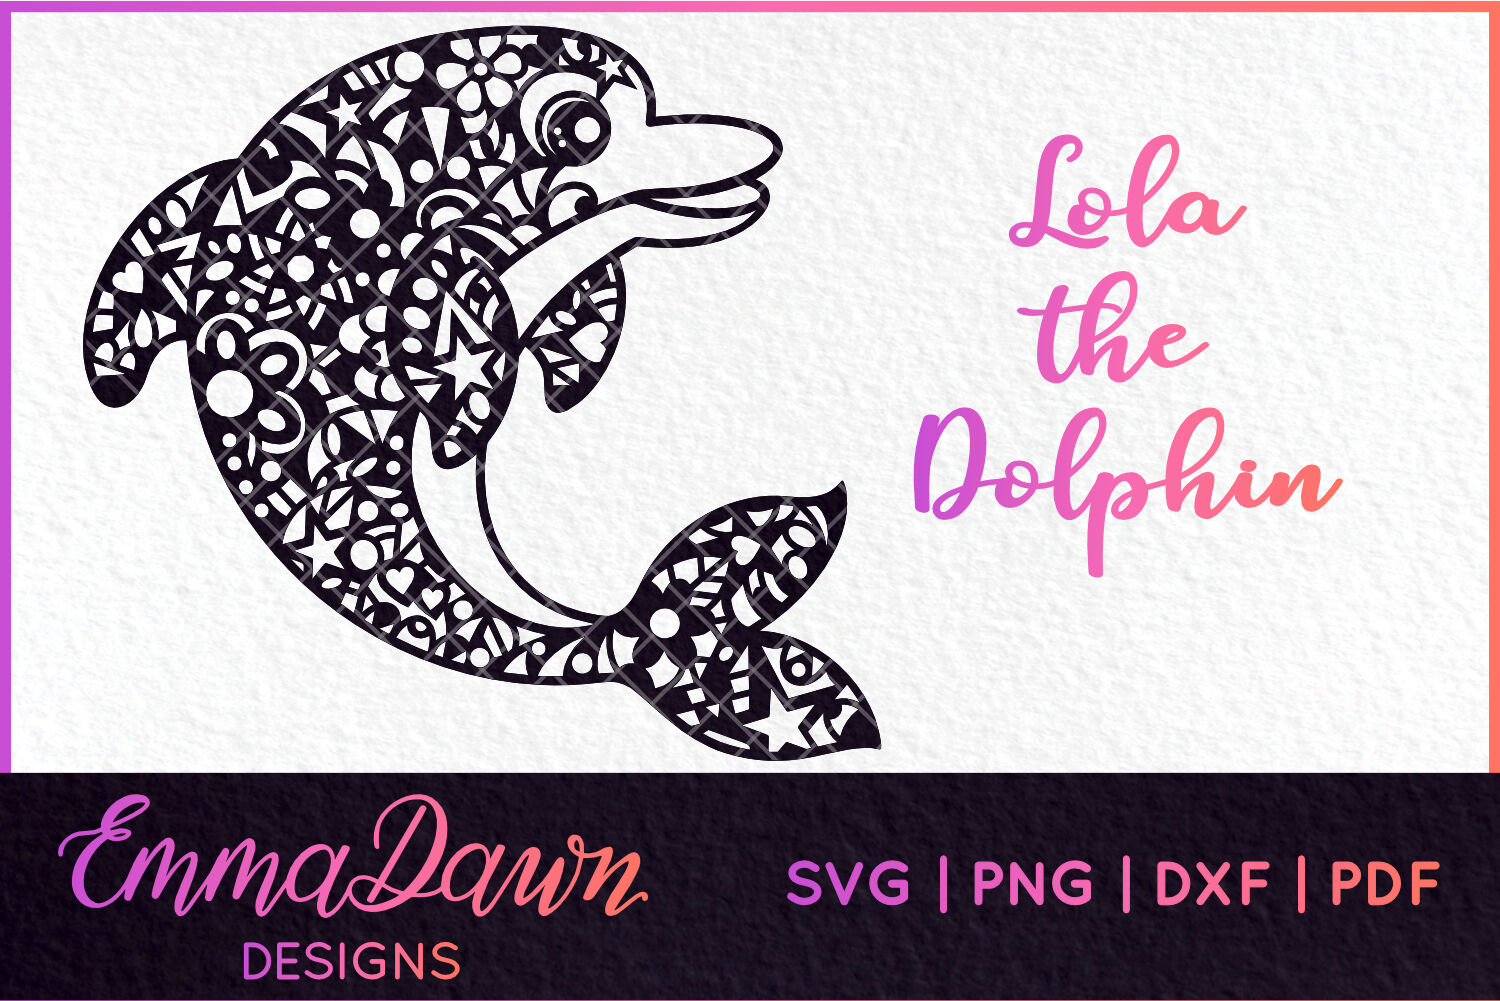 Lola The Dolphin Mandala Zentangle Design Svg By Emma Dawn Designs Thehungryjpeg Com